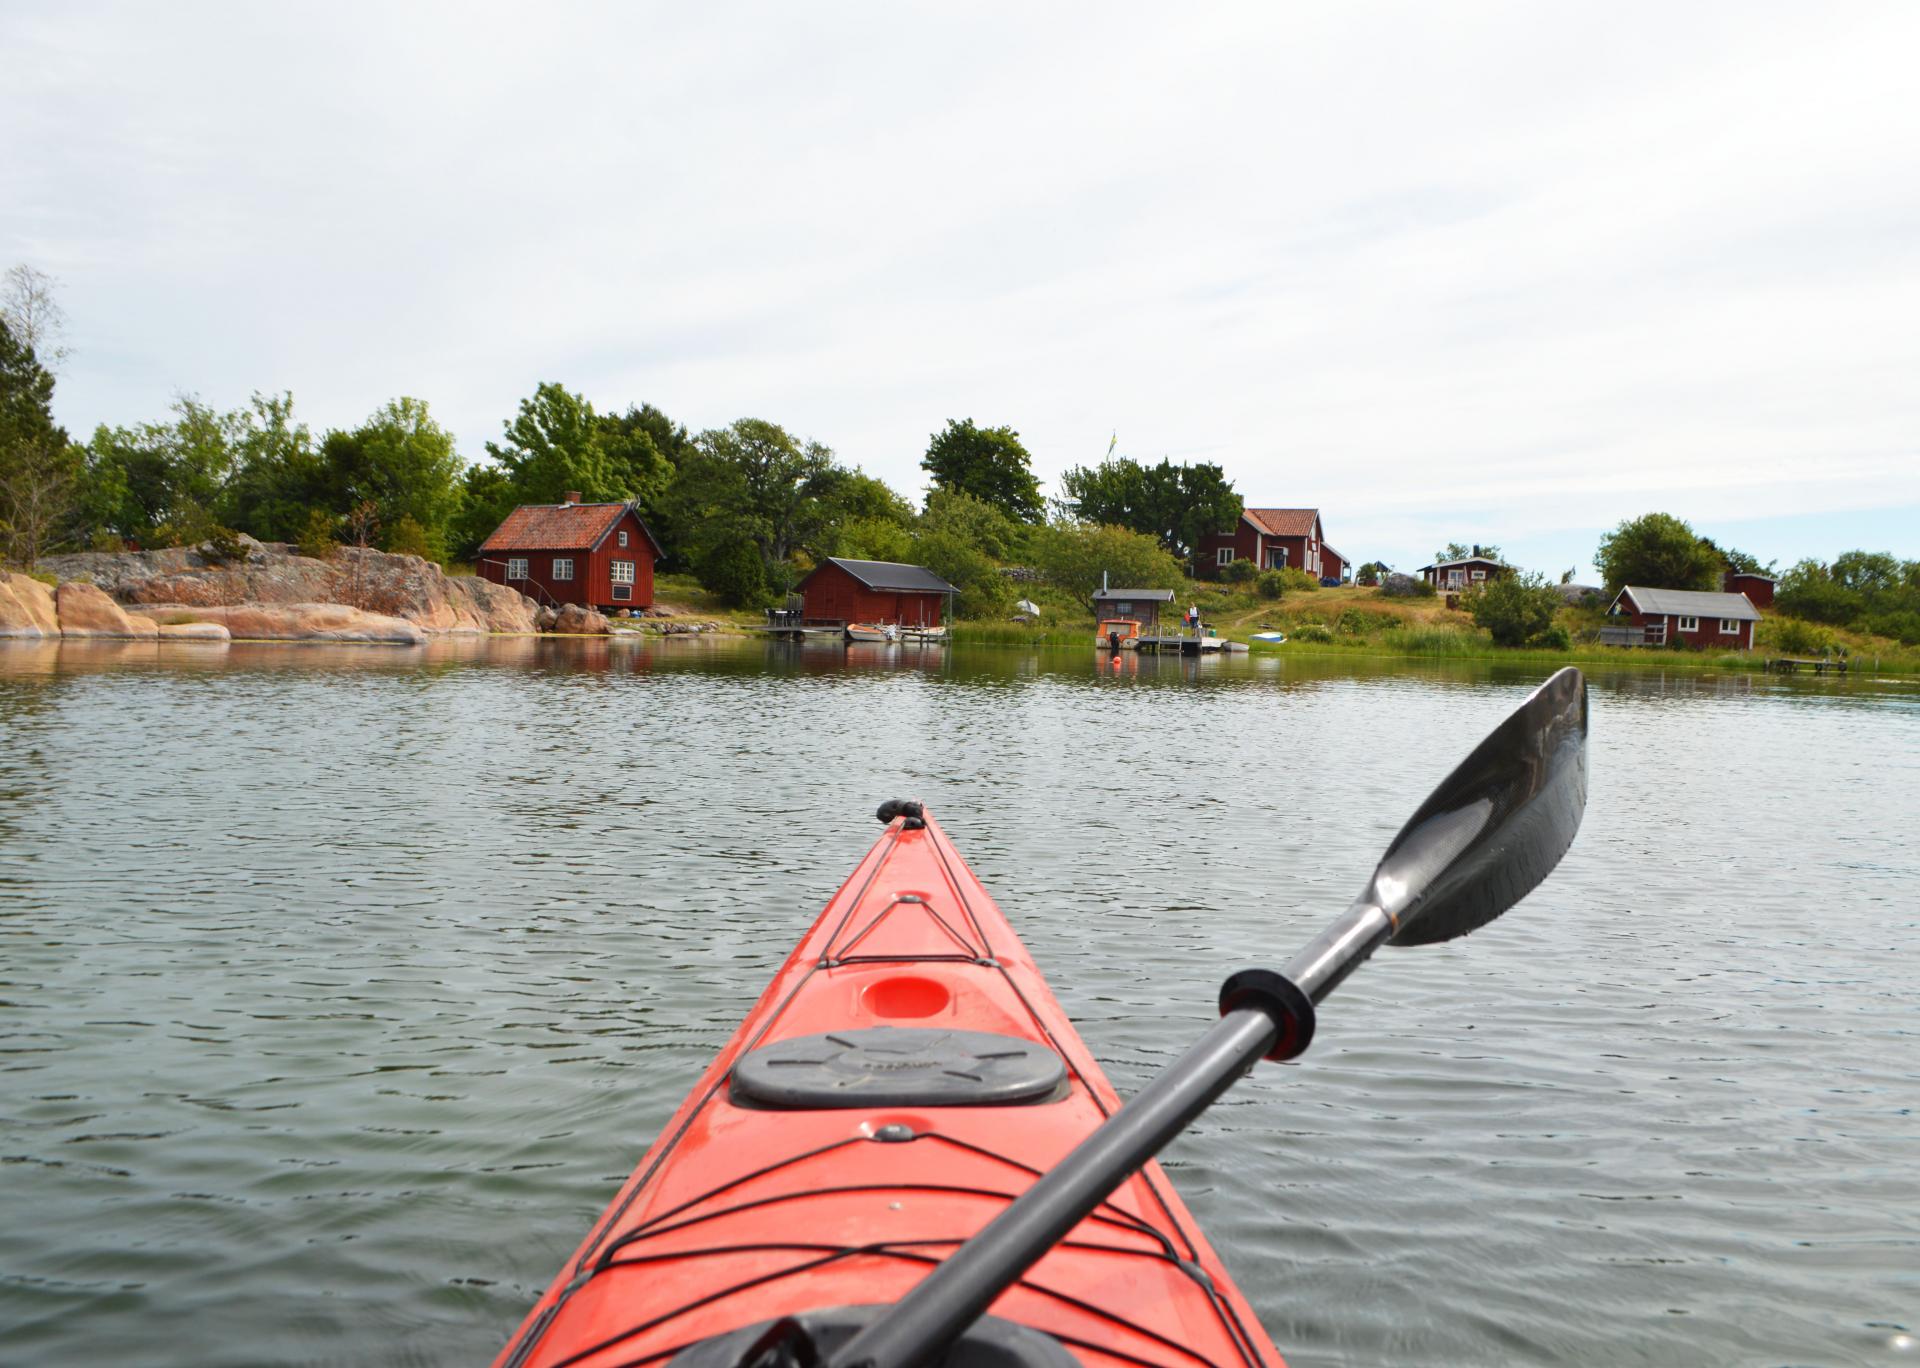 Sormland Sweden travel guide: explore Stockholm archipelago islands the girl outdoors